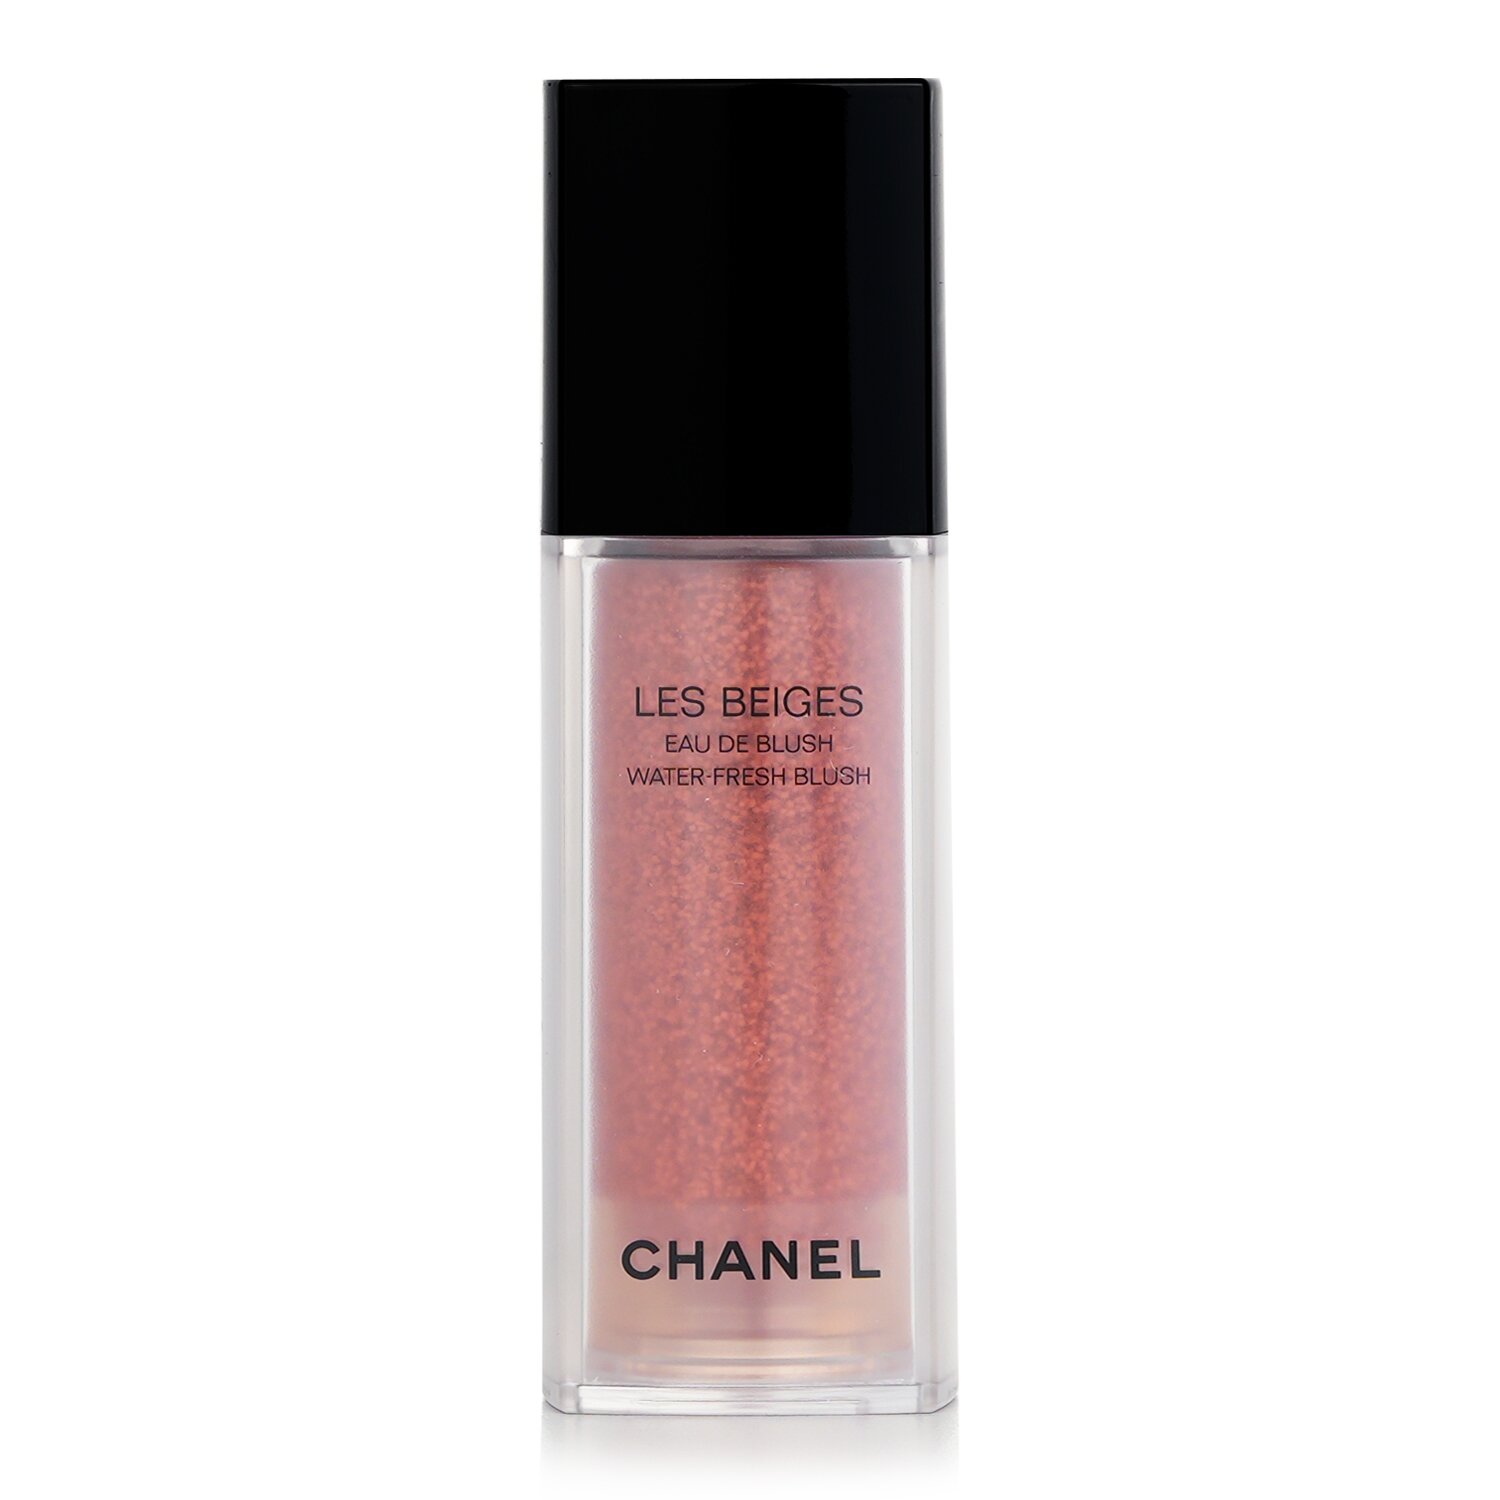 Chanel Les Beiges Water-Fresh Blush - Light Pink